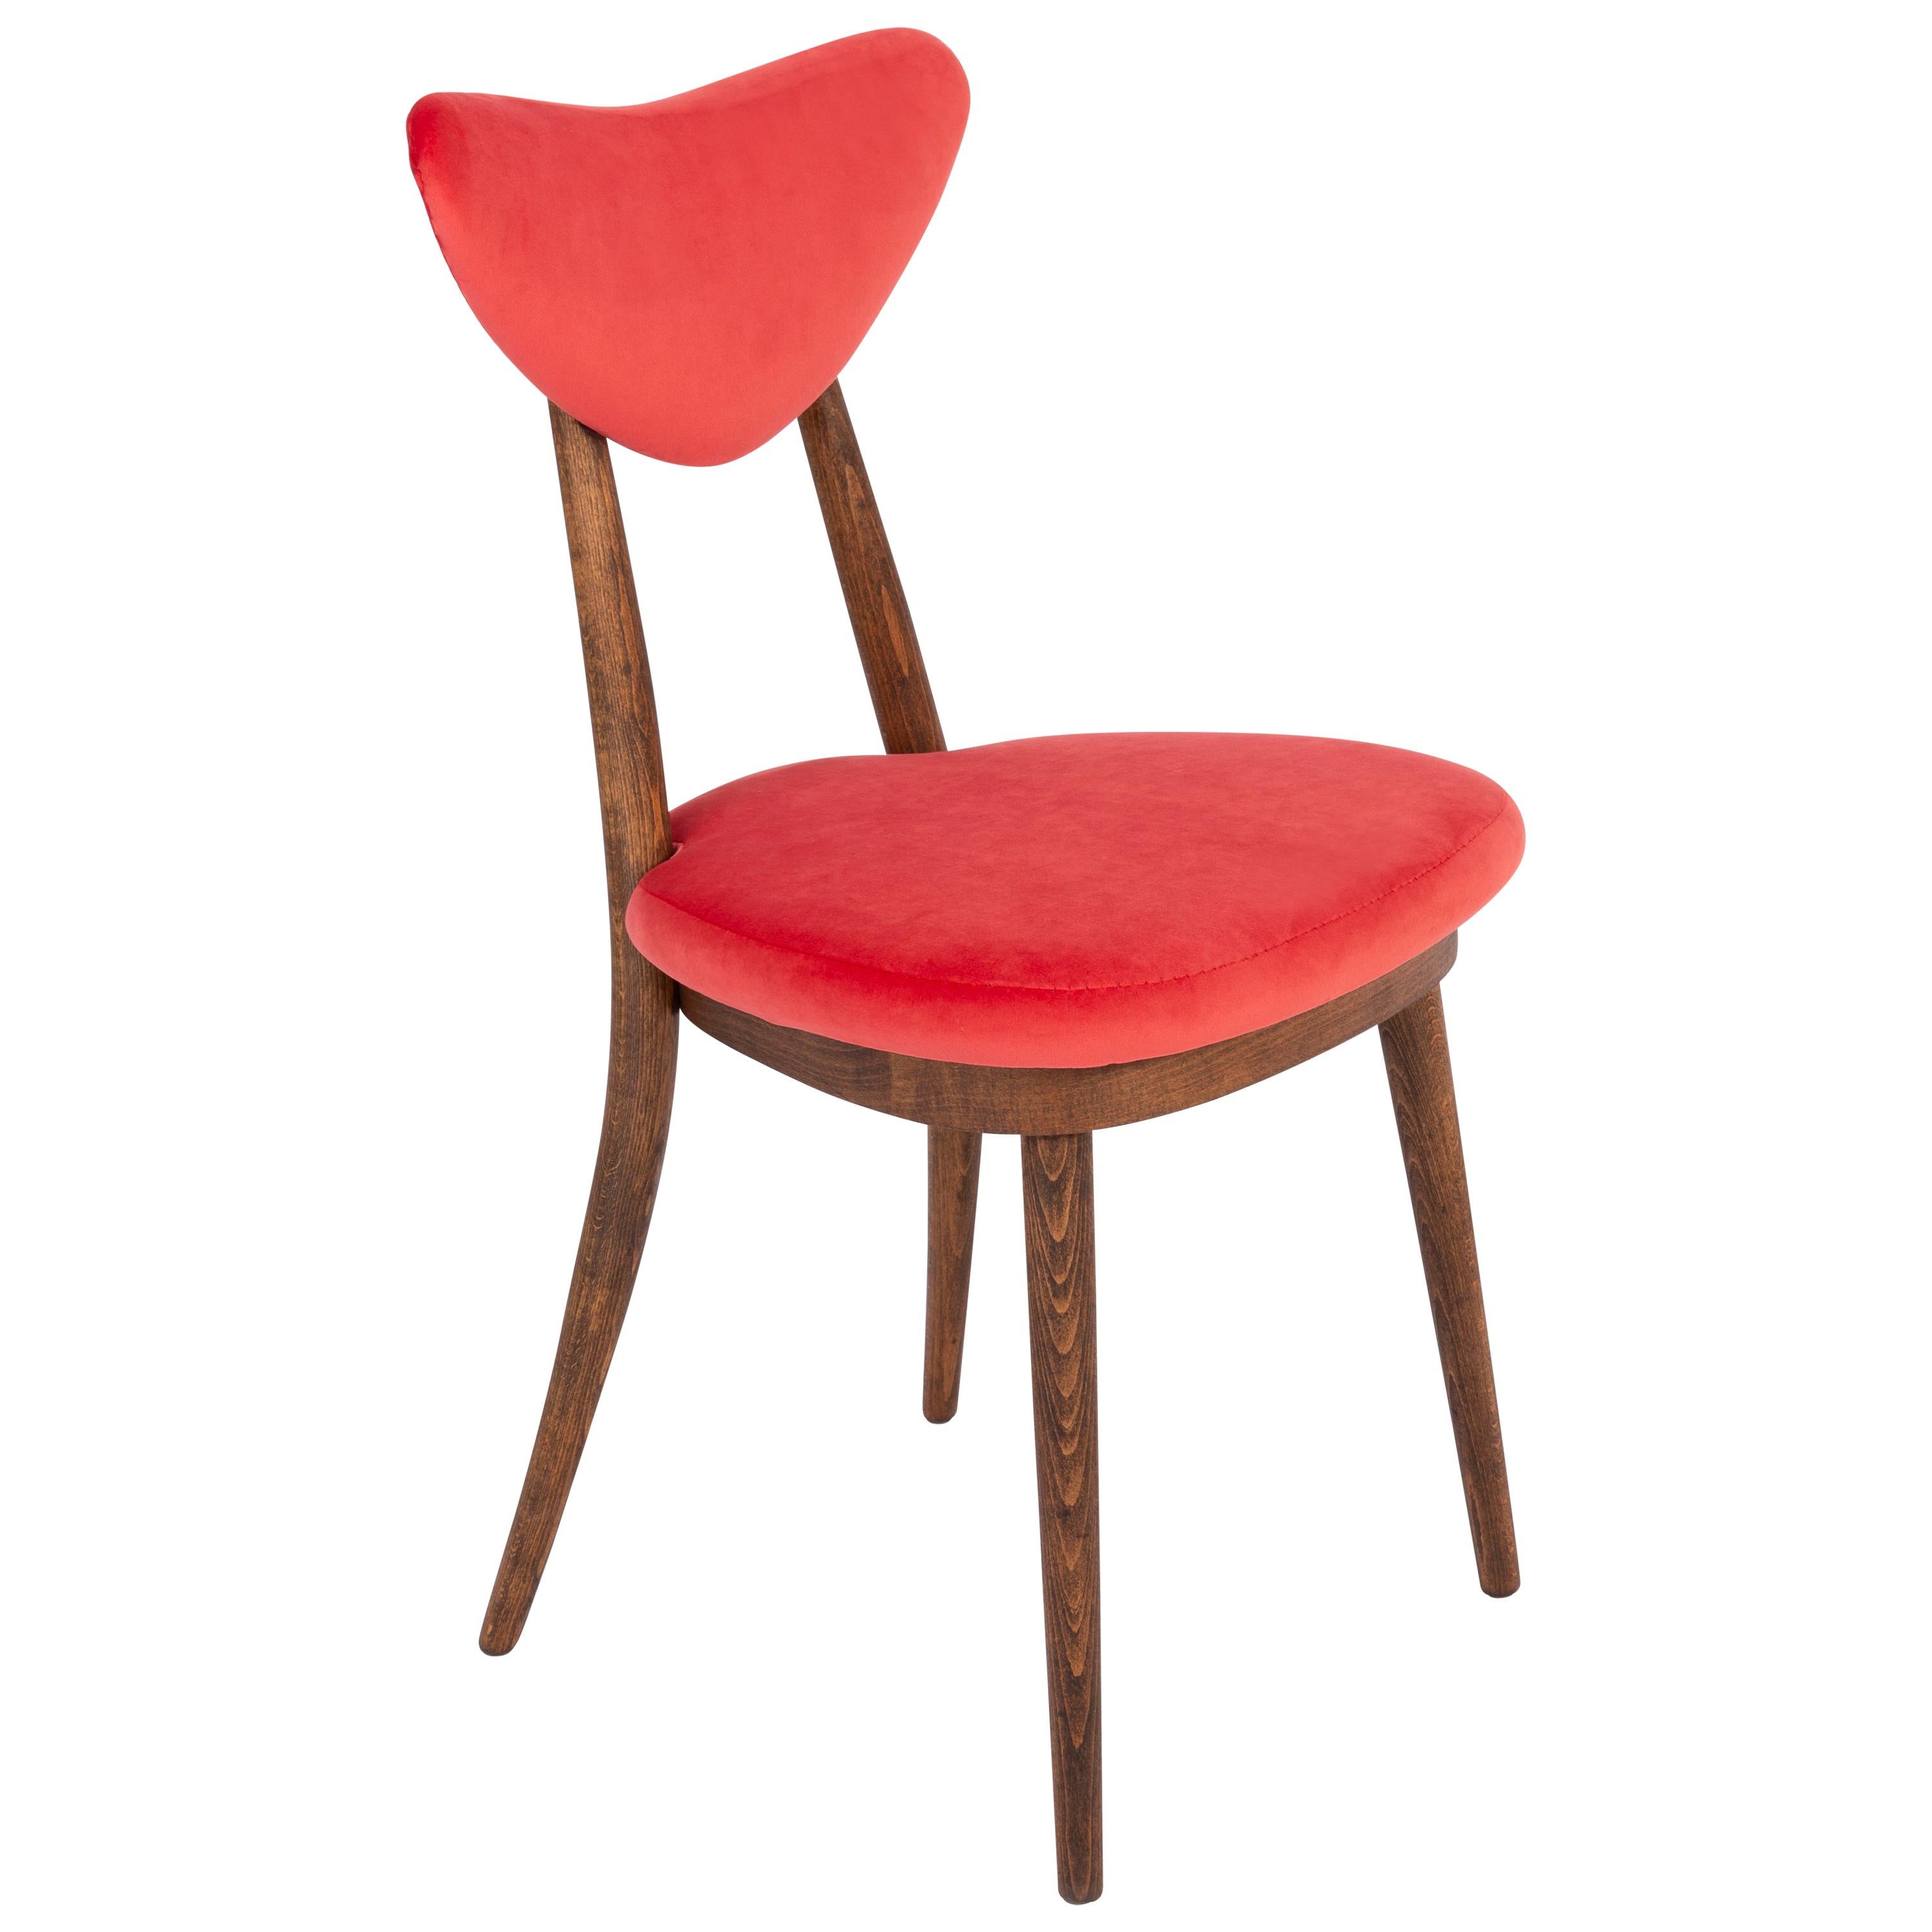 Vintage-Stuhl aus rotem Herz-Samt, Polen, 1960er Jahre